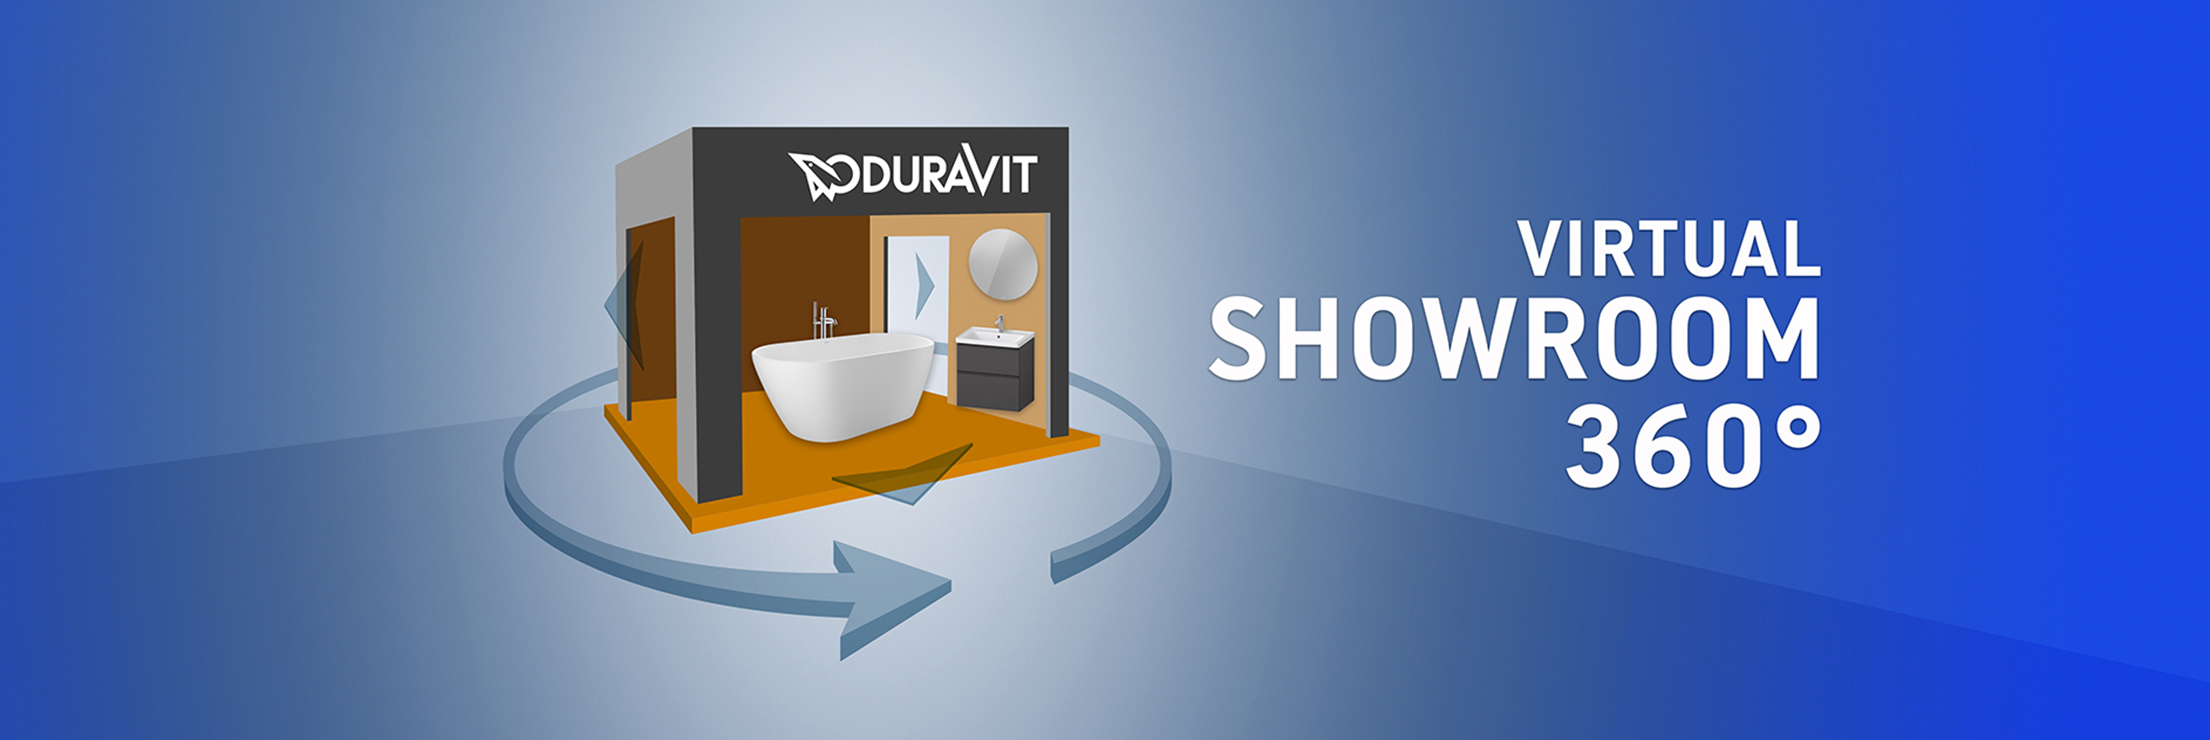 virtual_showroom_ddc-pro-duravit.jpg